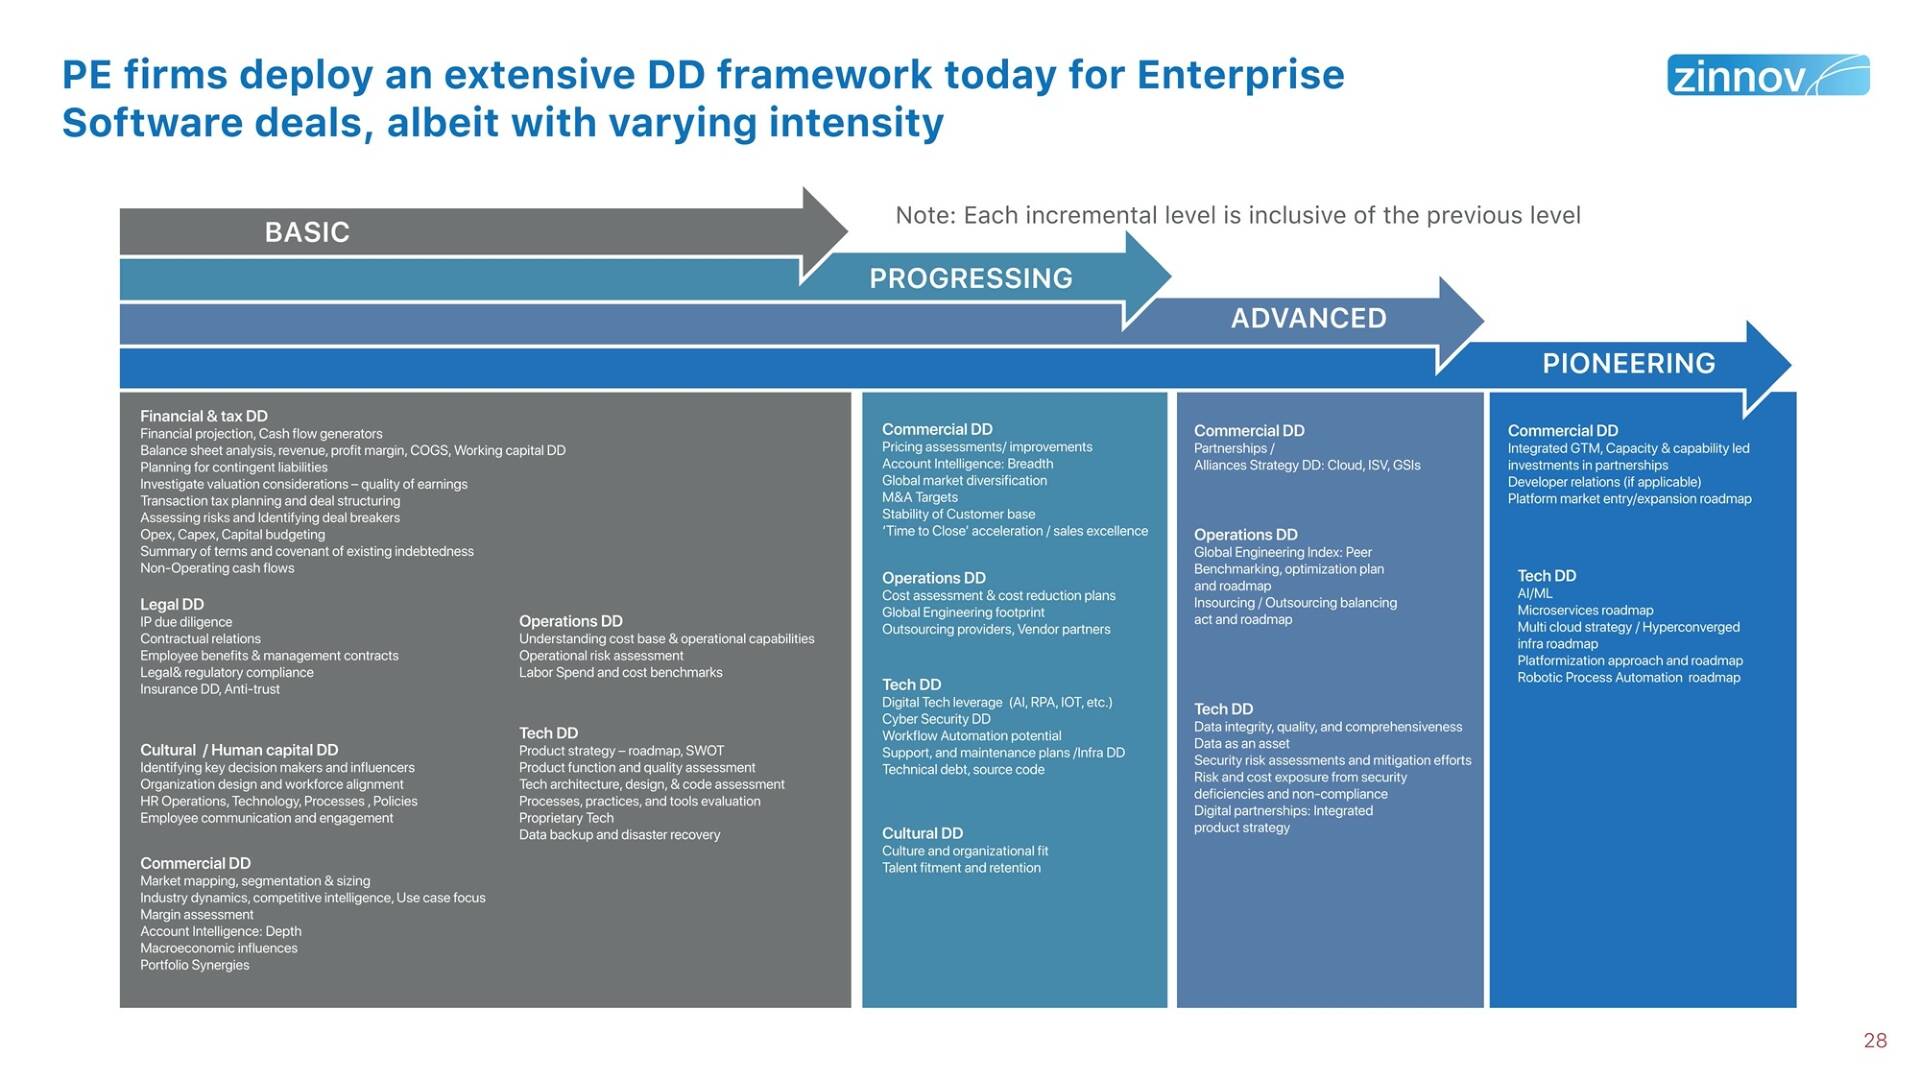 Enterprise Software Pe Report Summary Drs 18mar202028